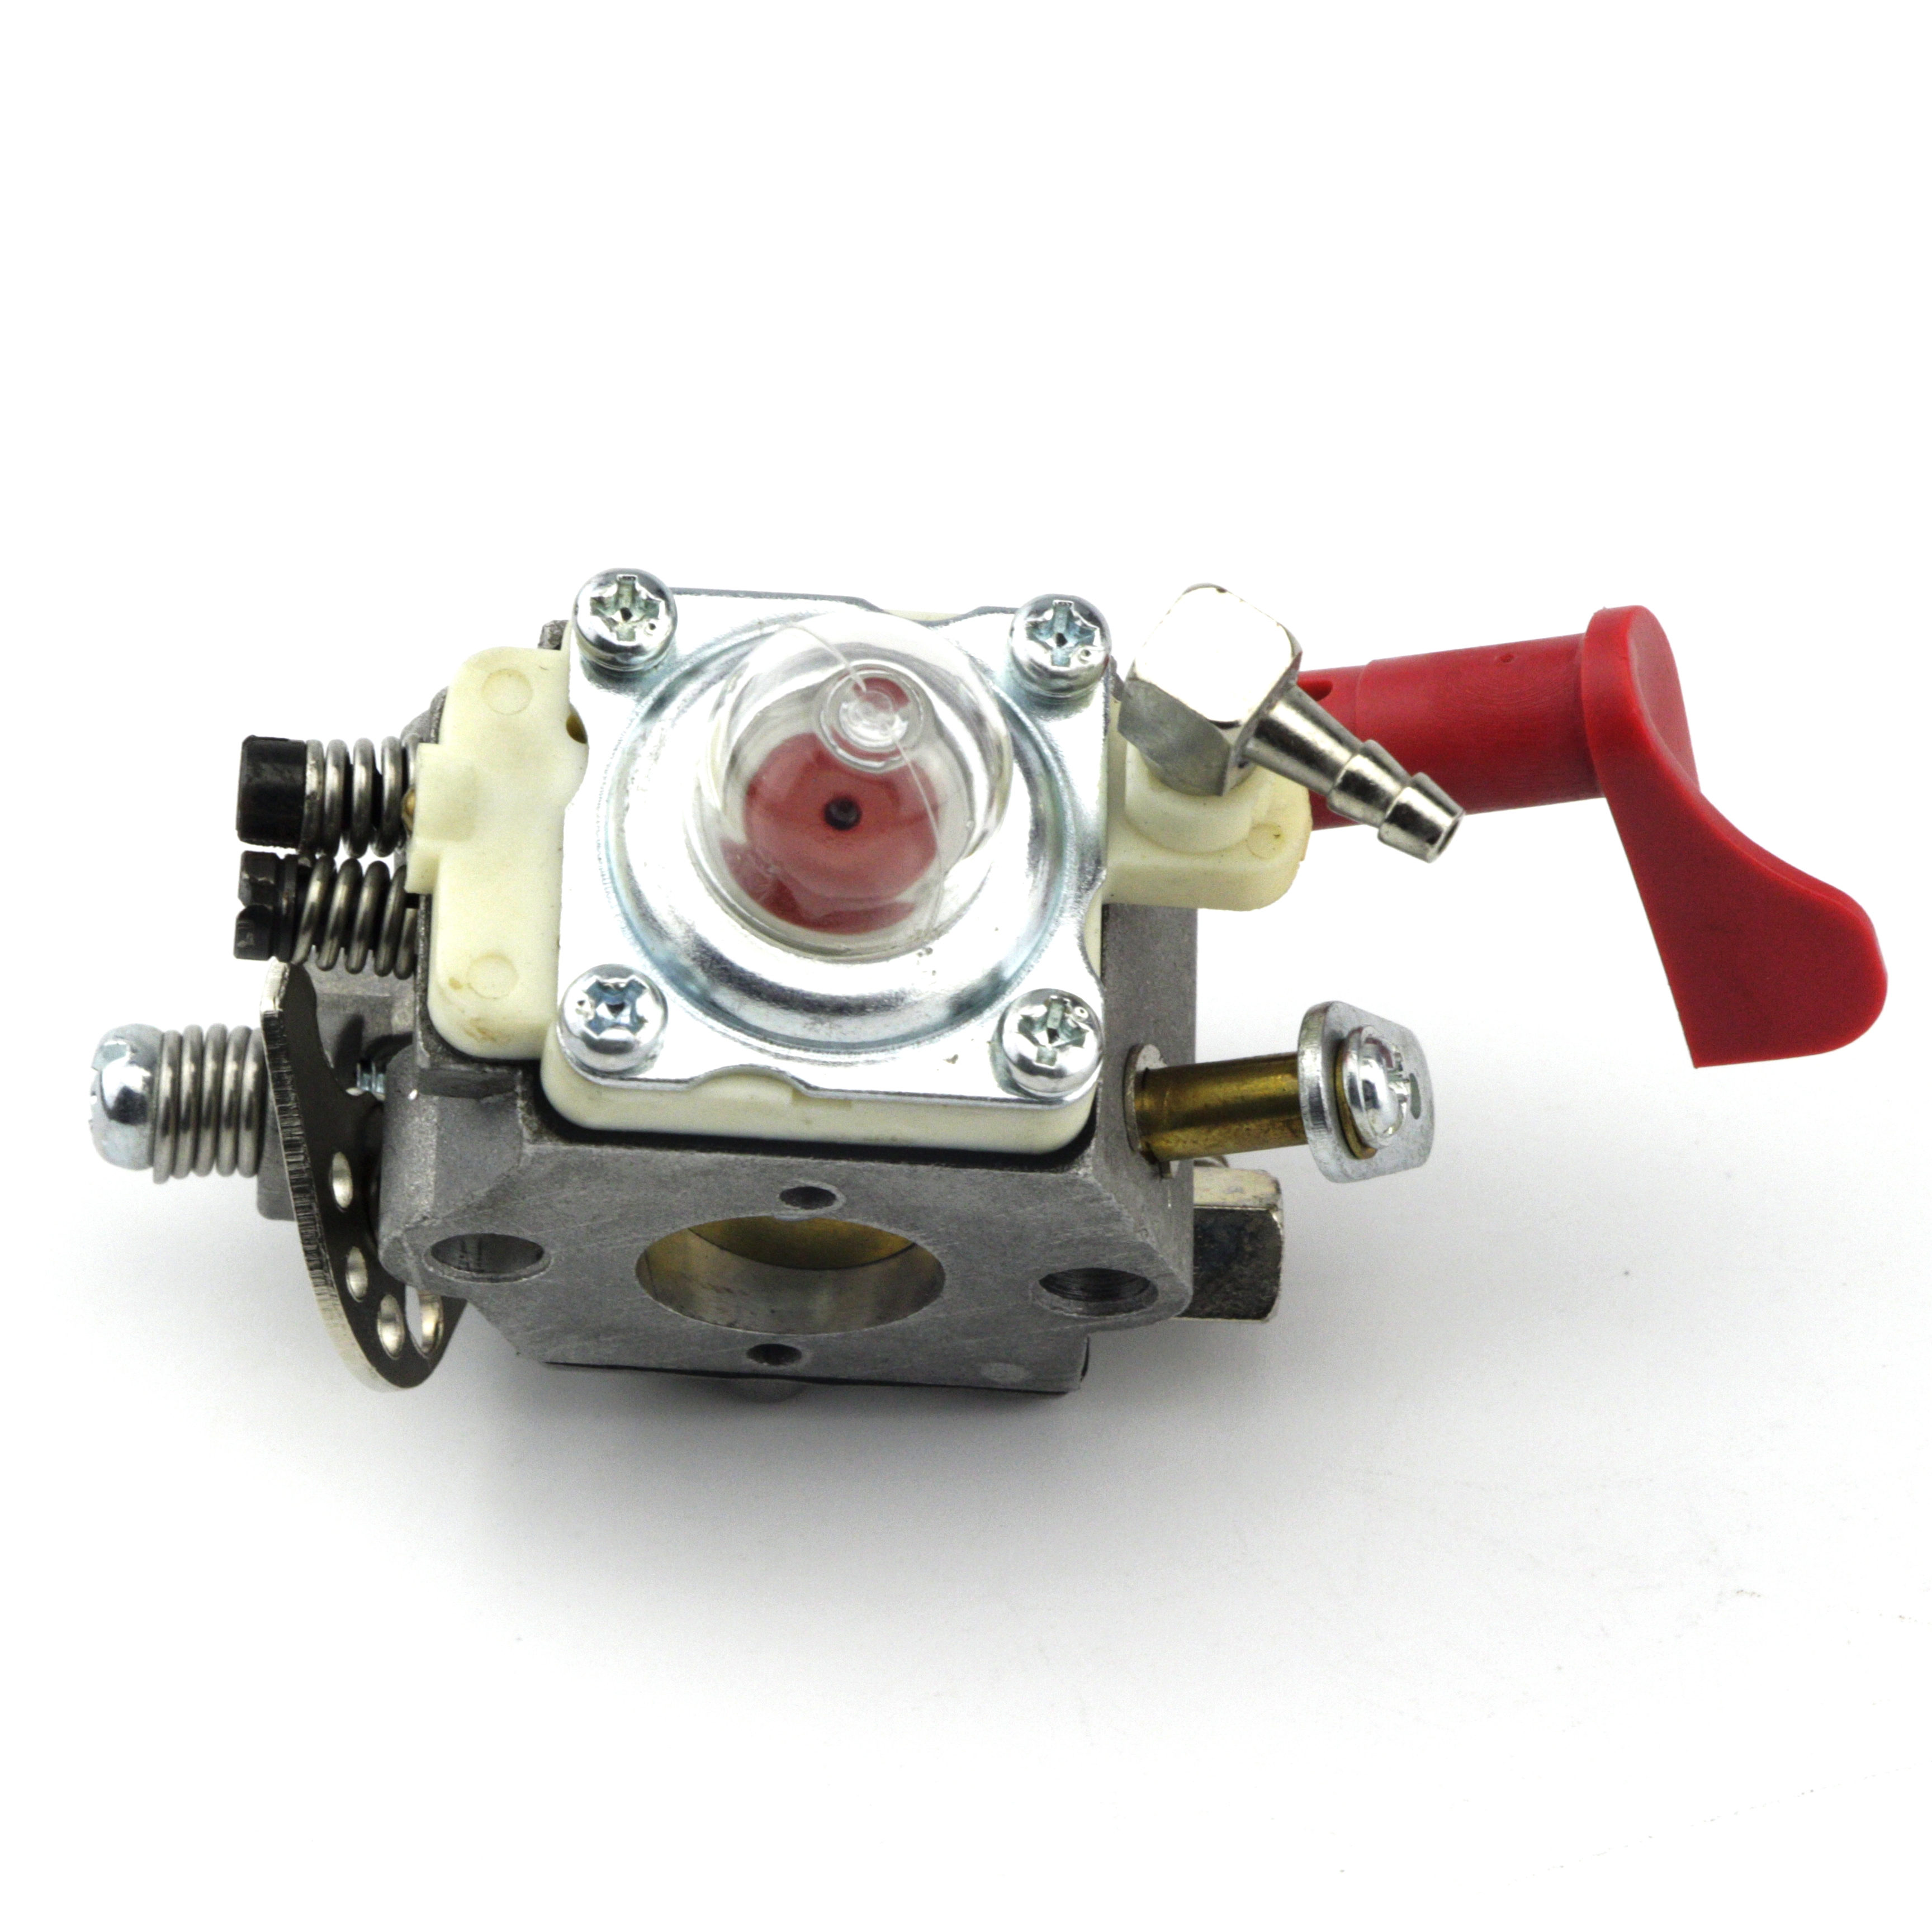 Walbro Carburetor WT997 668 fits Zenoah CY Engine for HPI FG Losi Rovan KM Carb